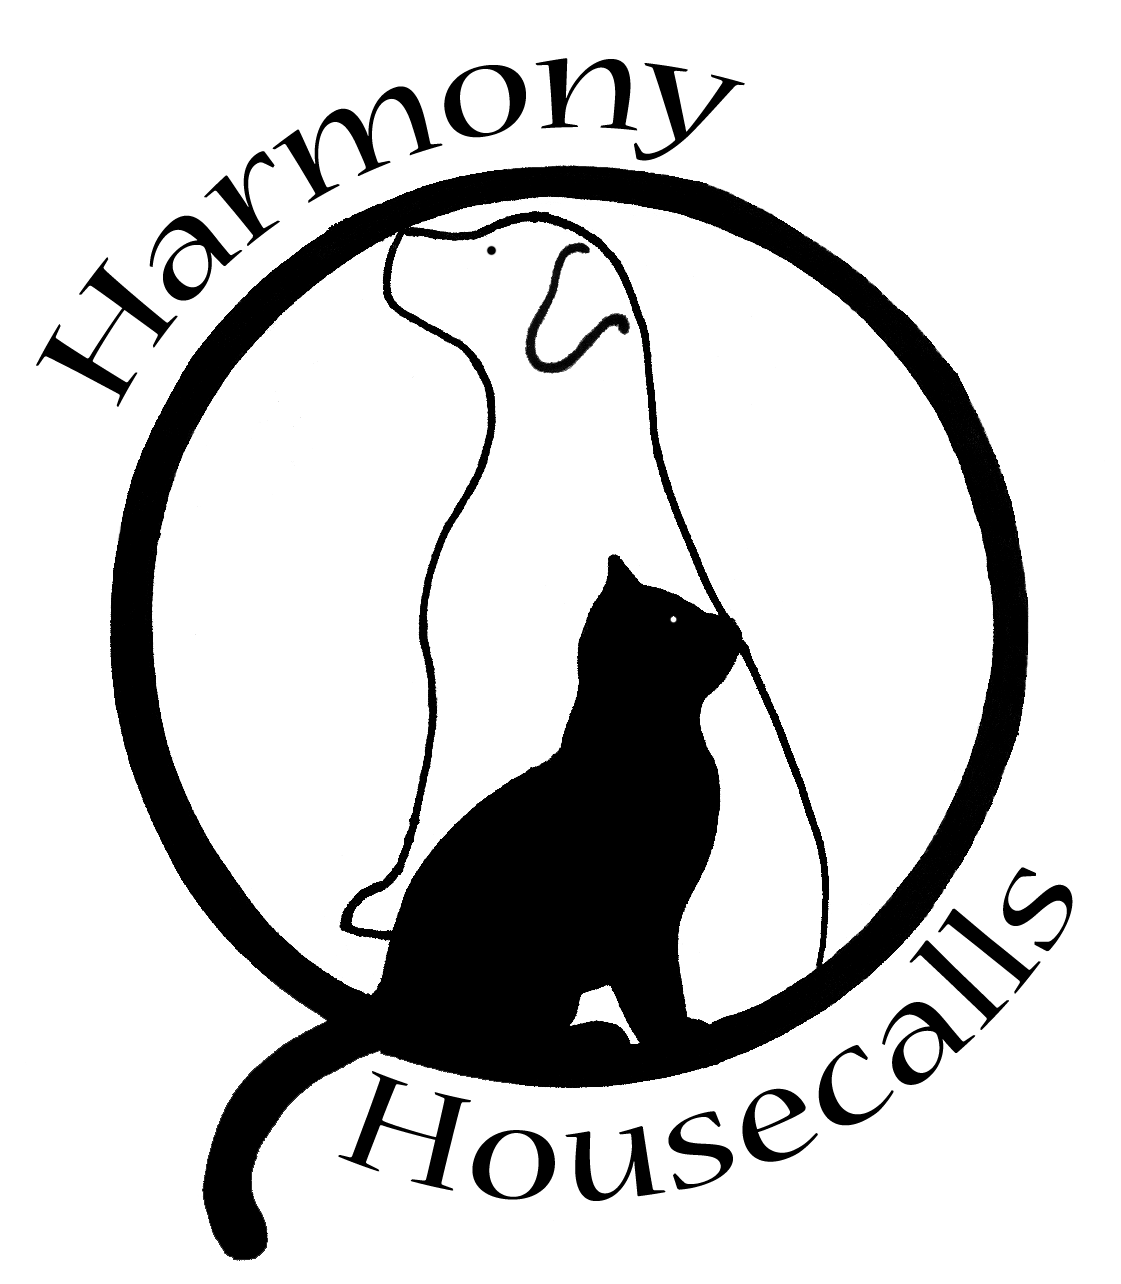 Harmony Housecalls logo words merged